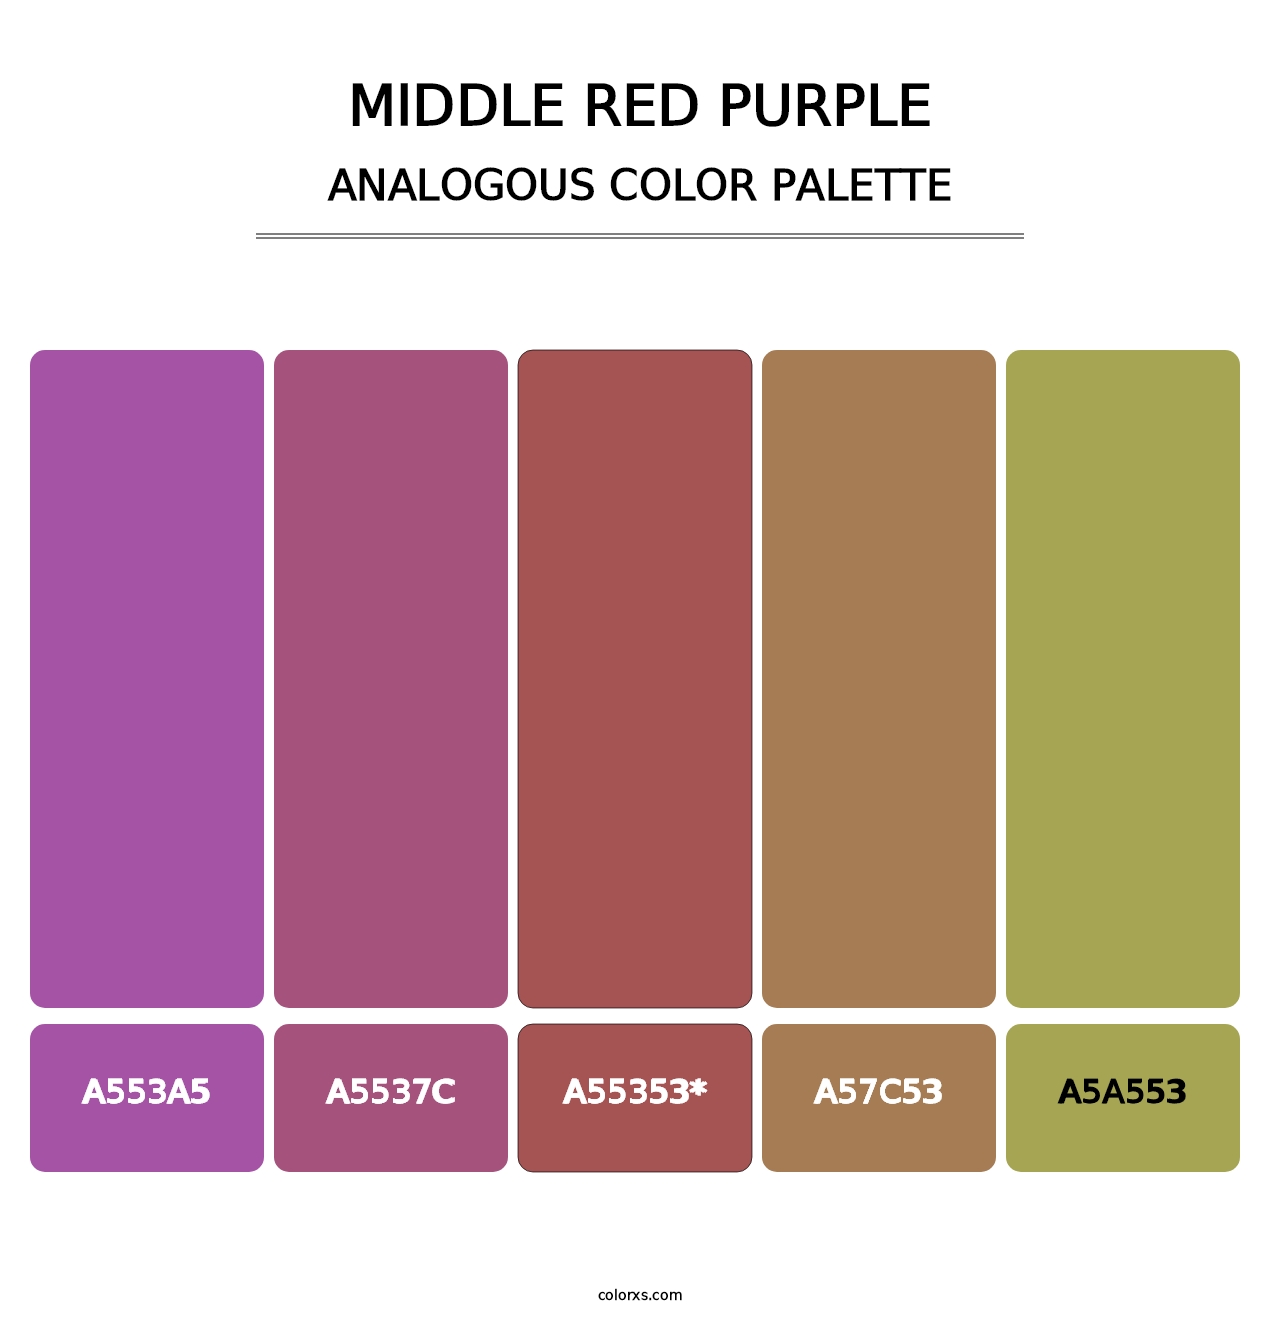 Middle Red Purple - Analogous Color Palette